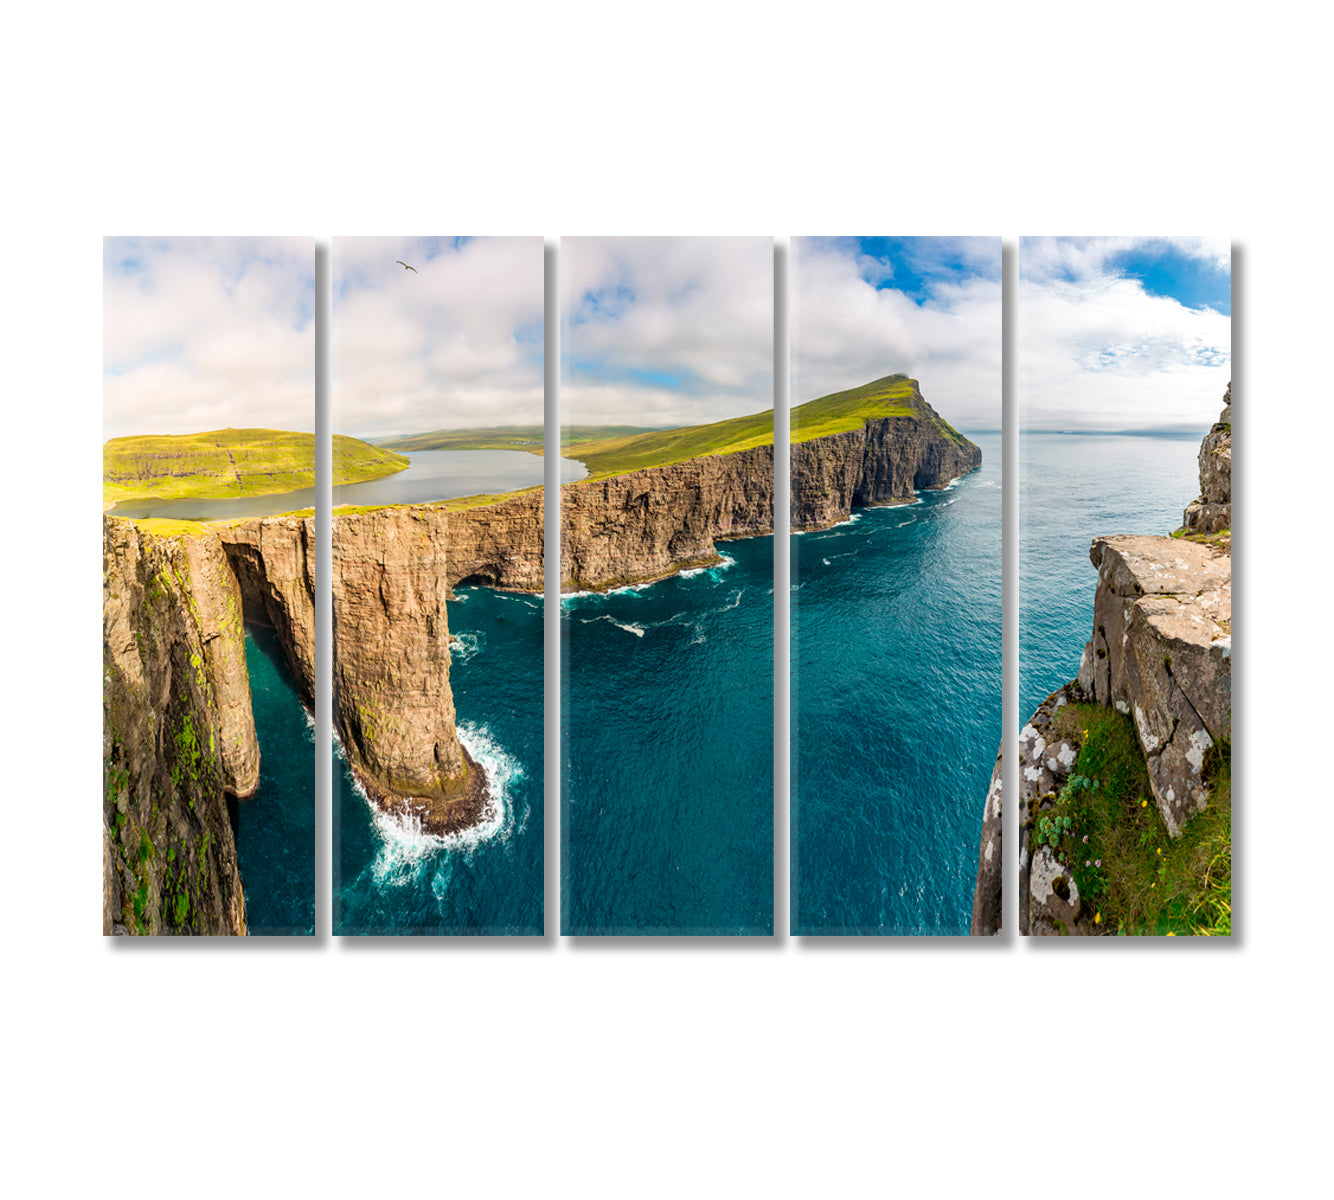 Leitisvatn Or Sorvagsvatn Lake Over the Ocean Faroe Islands Canvas Print-Canvas Print-CetArt-5 Panels-36x24 inches-CetArt